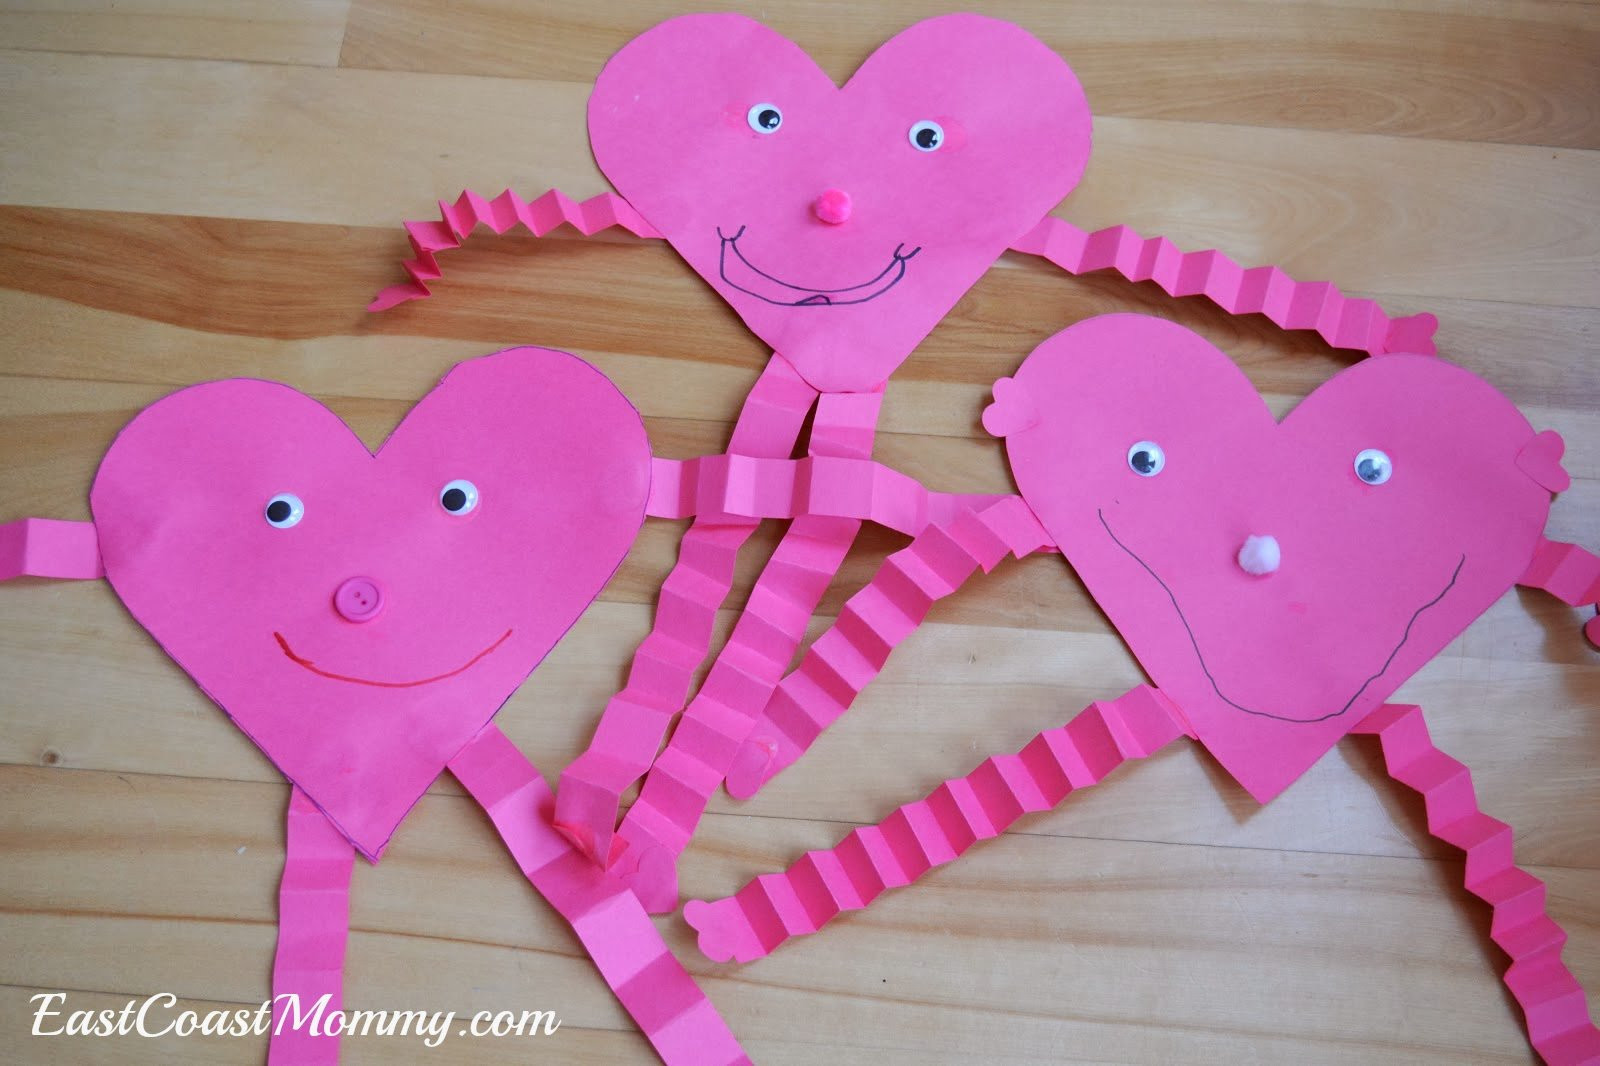 Preschool Valentine Craft Ideas
 12 Easy Valentine Crafts for Toddlers & Preschoolers You